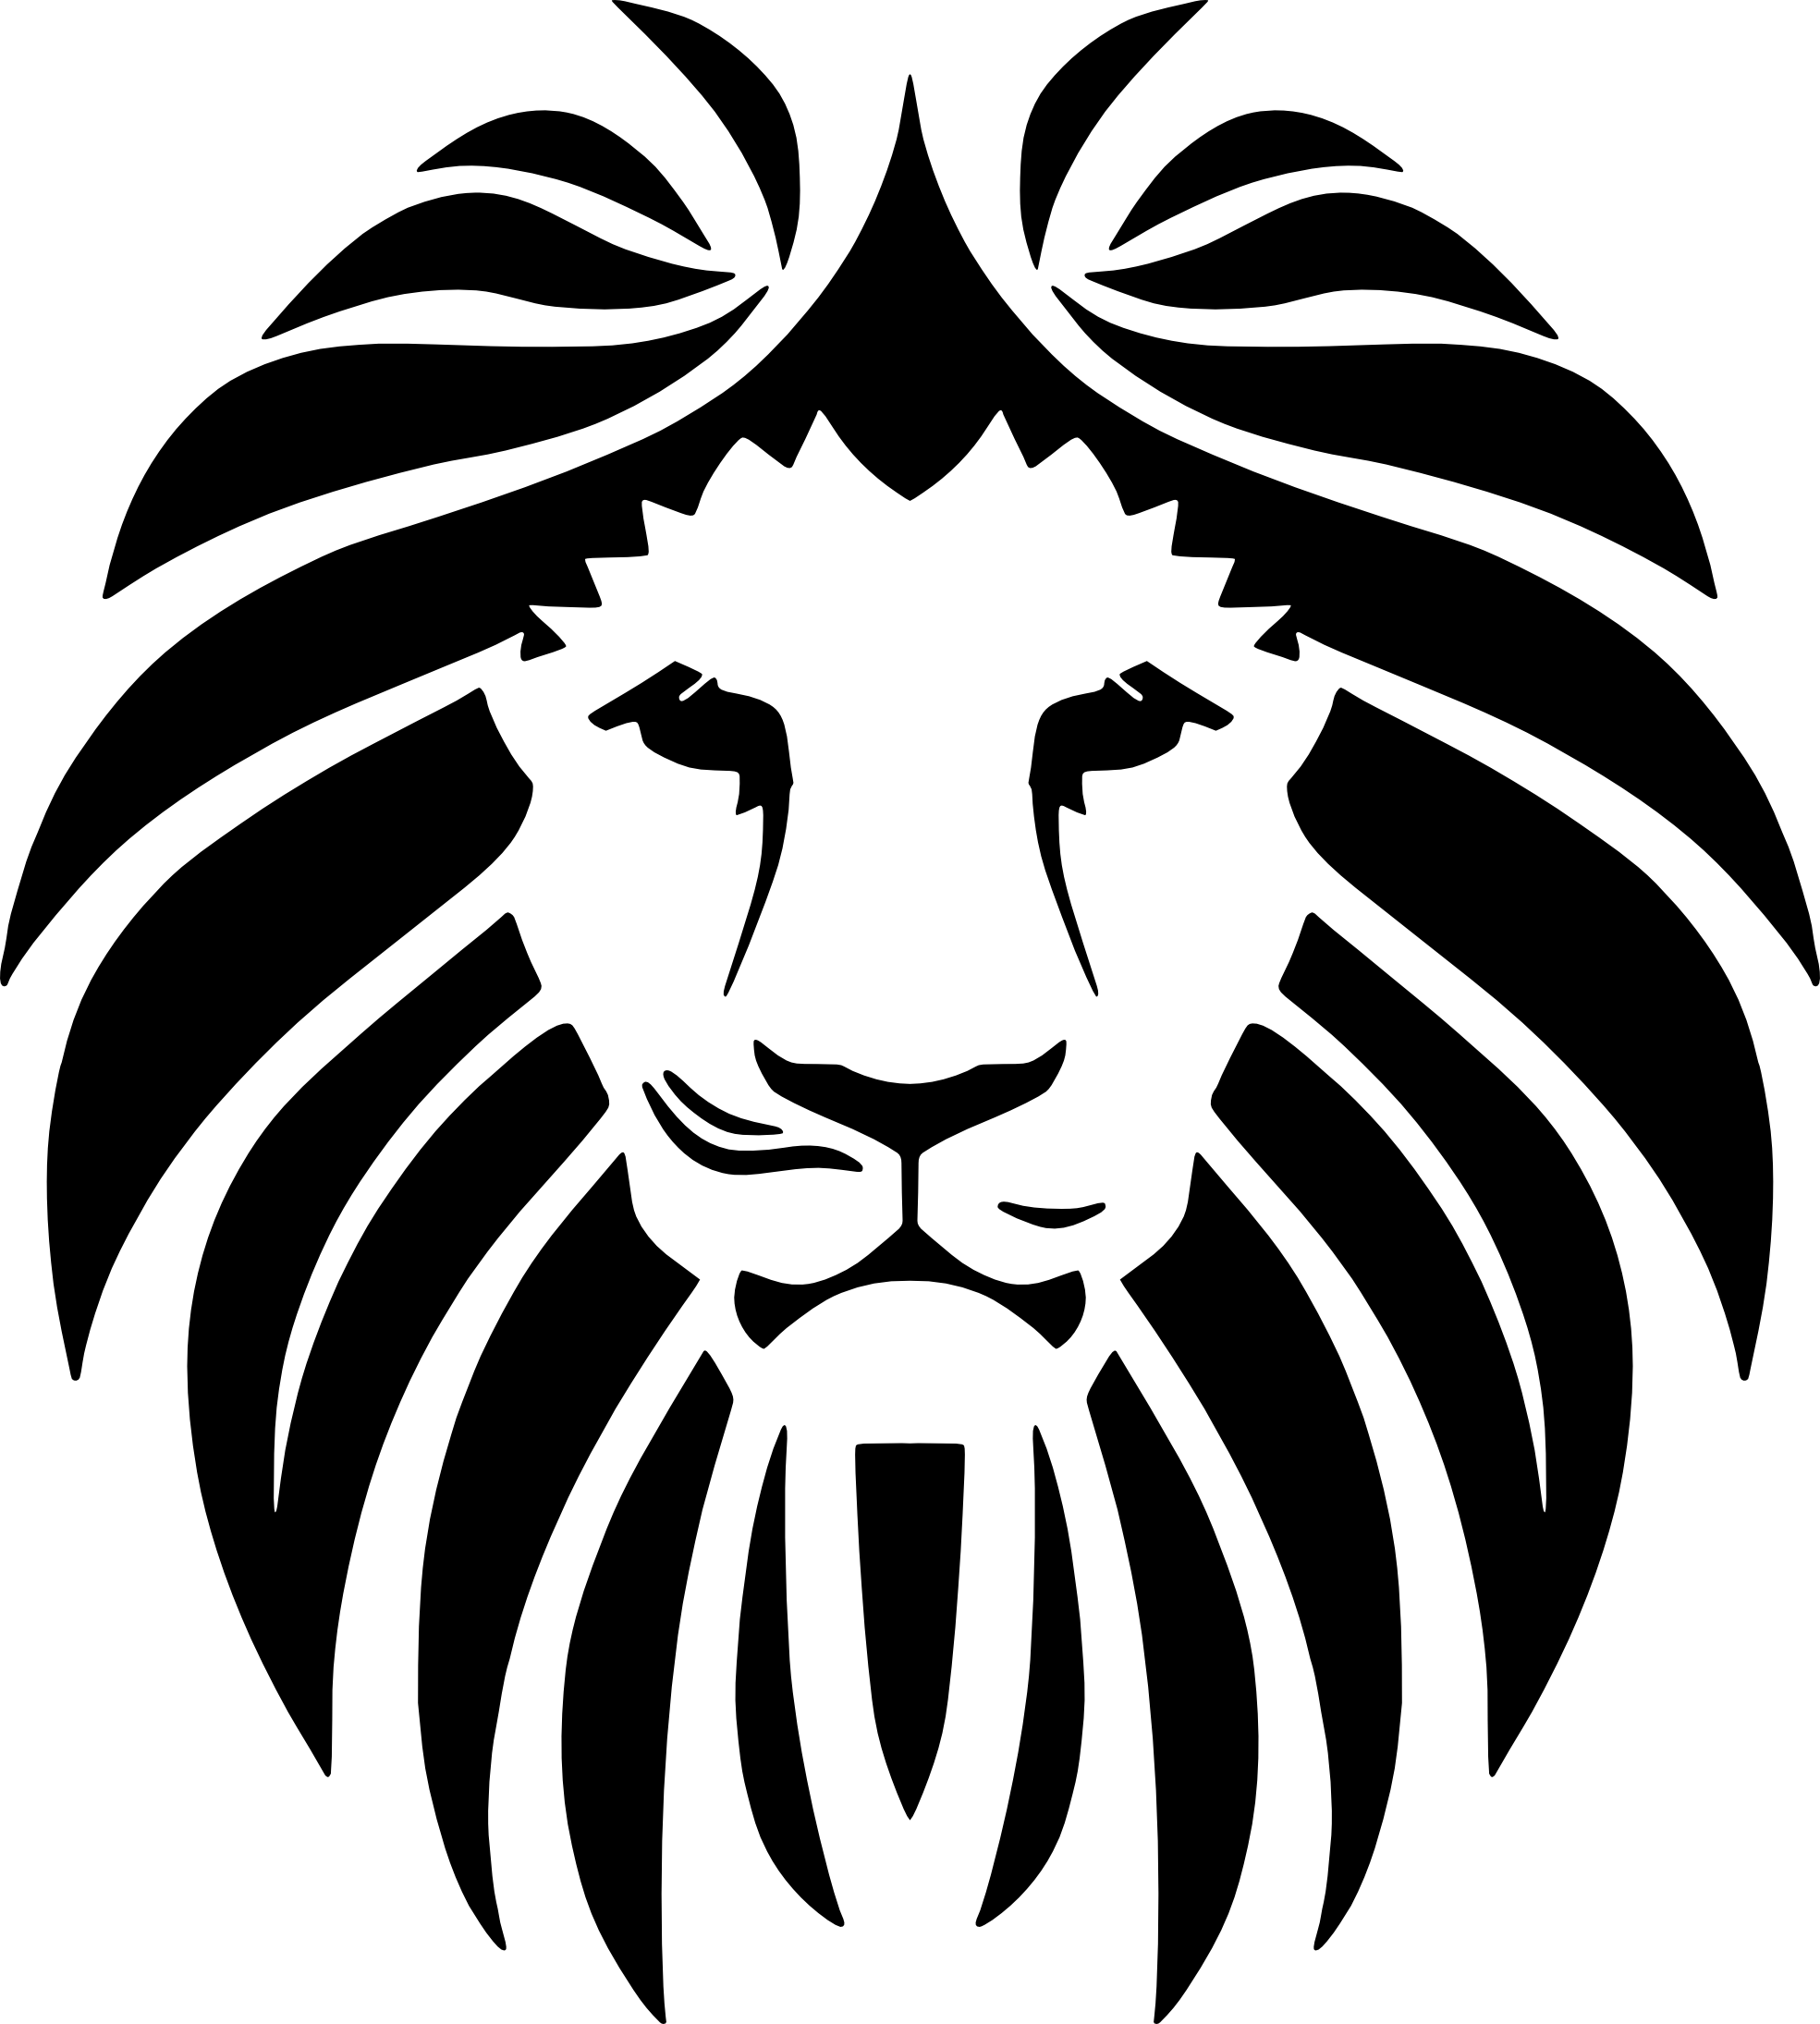 Lion of Judah Logo - clipartist.net » Search Results » lion | lion of judah logos ideas ...